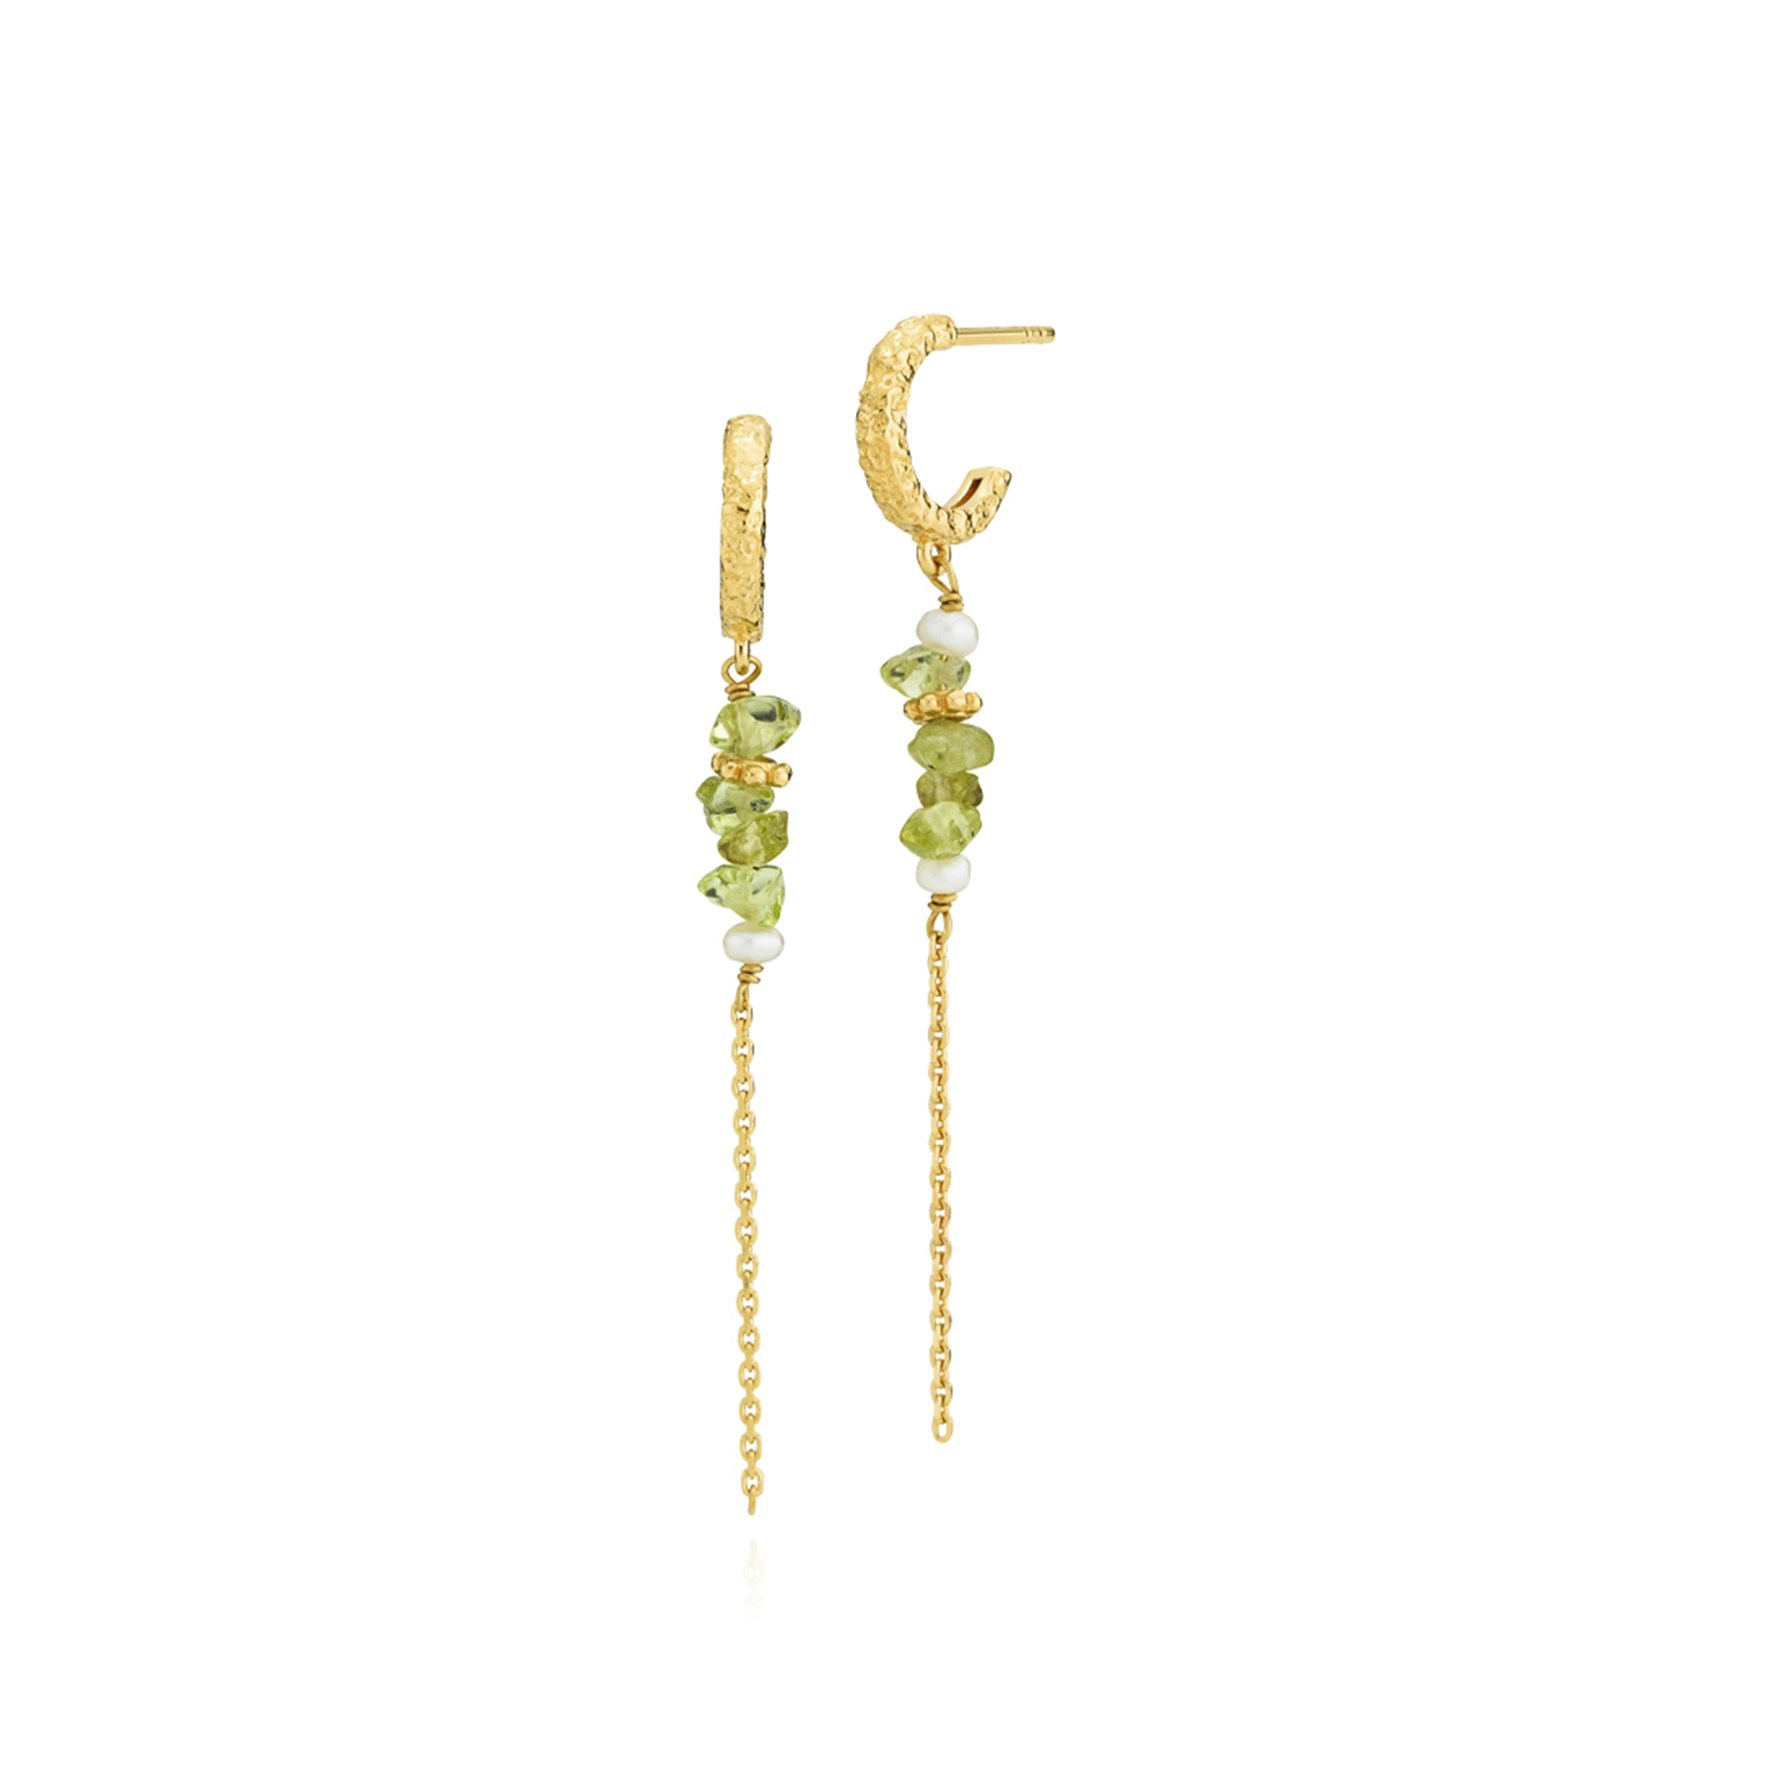 Beach Green Earrings von Sistie in Vergoldet-Silber Sterling 925